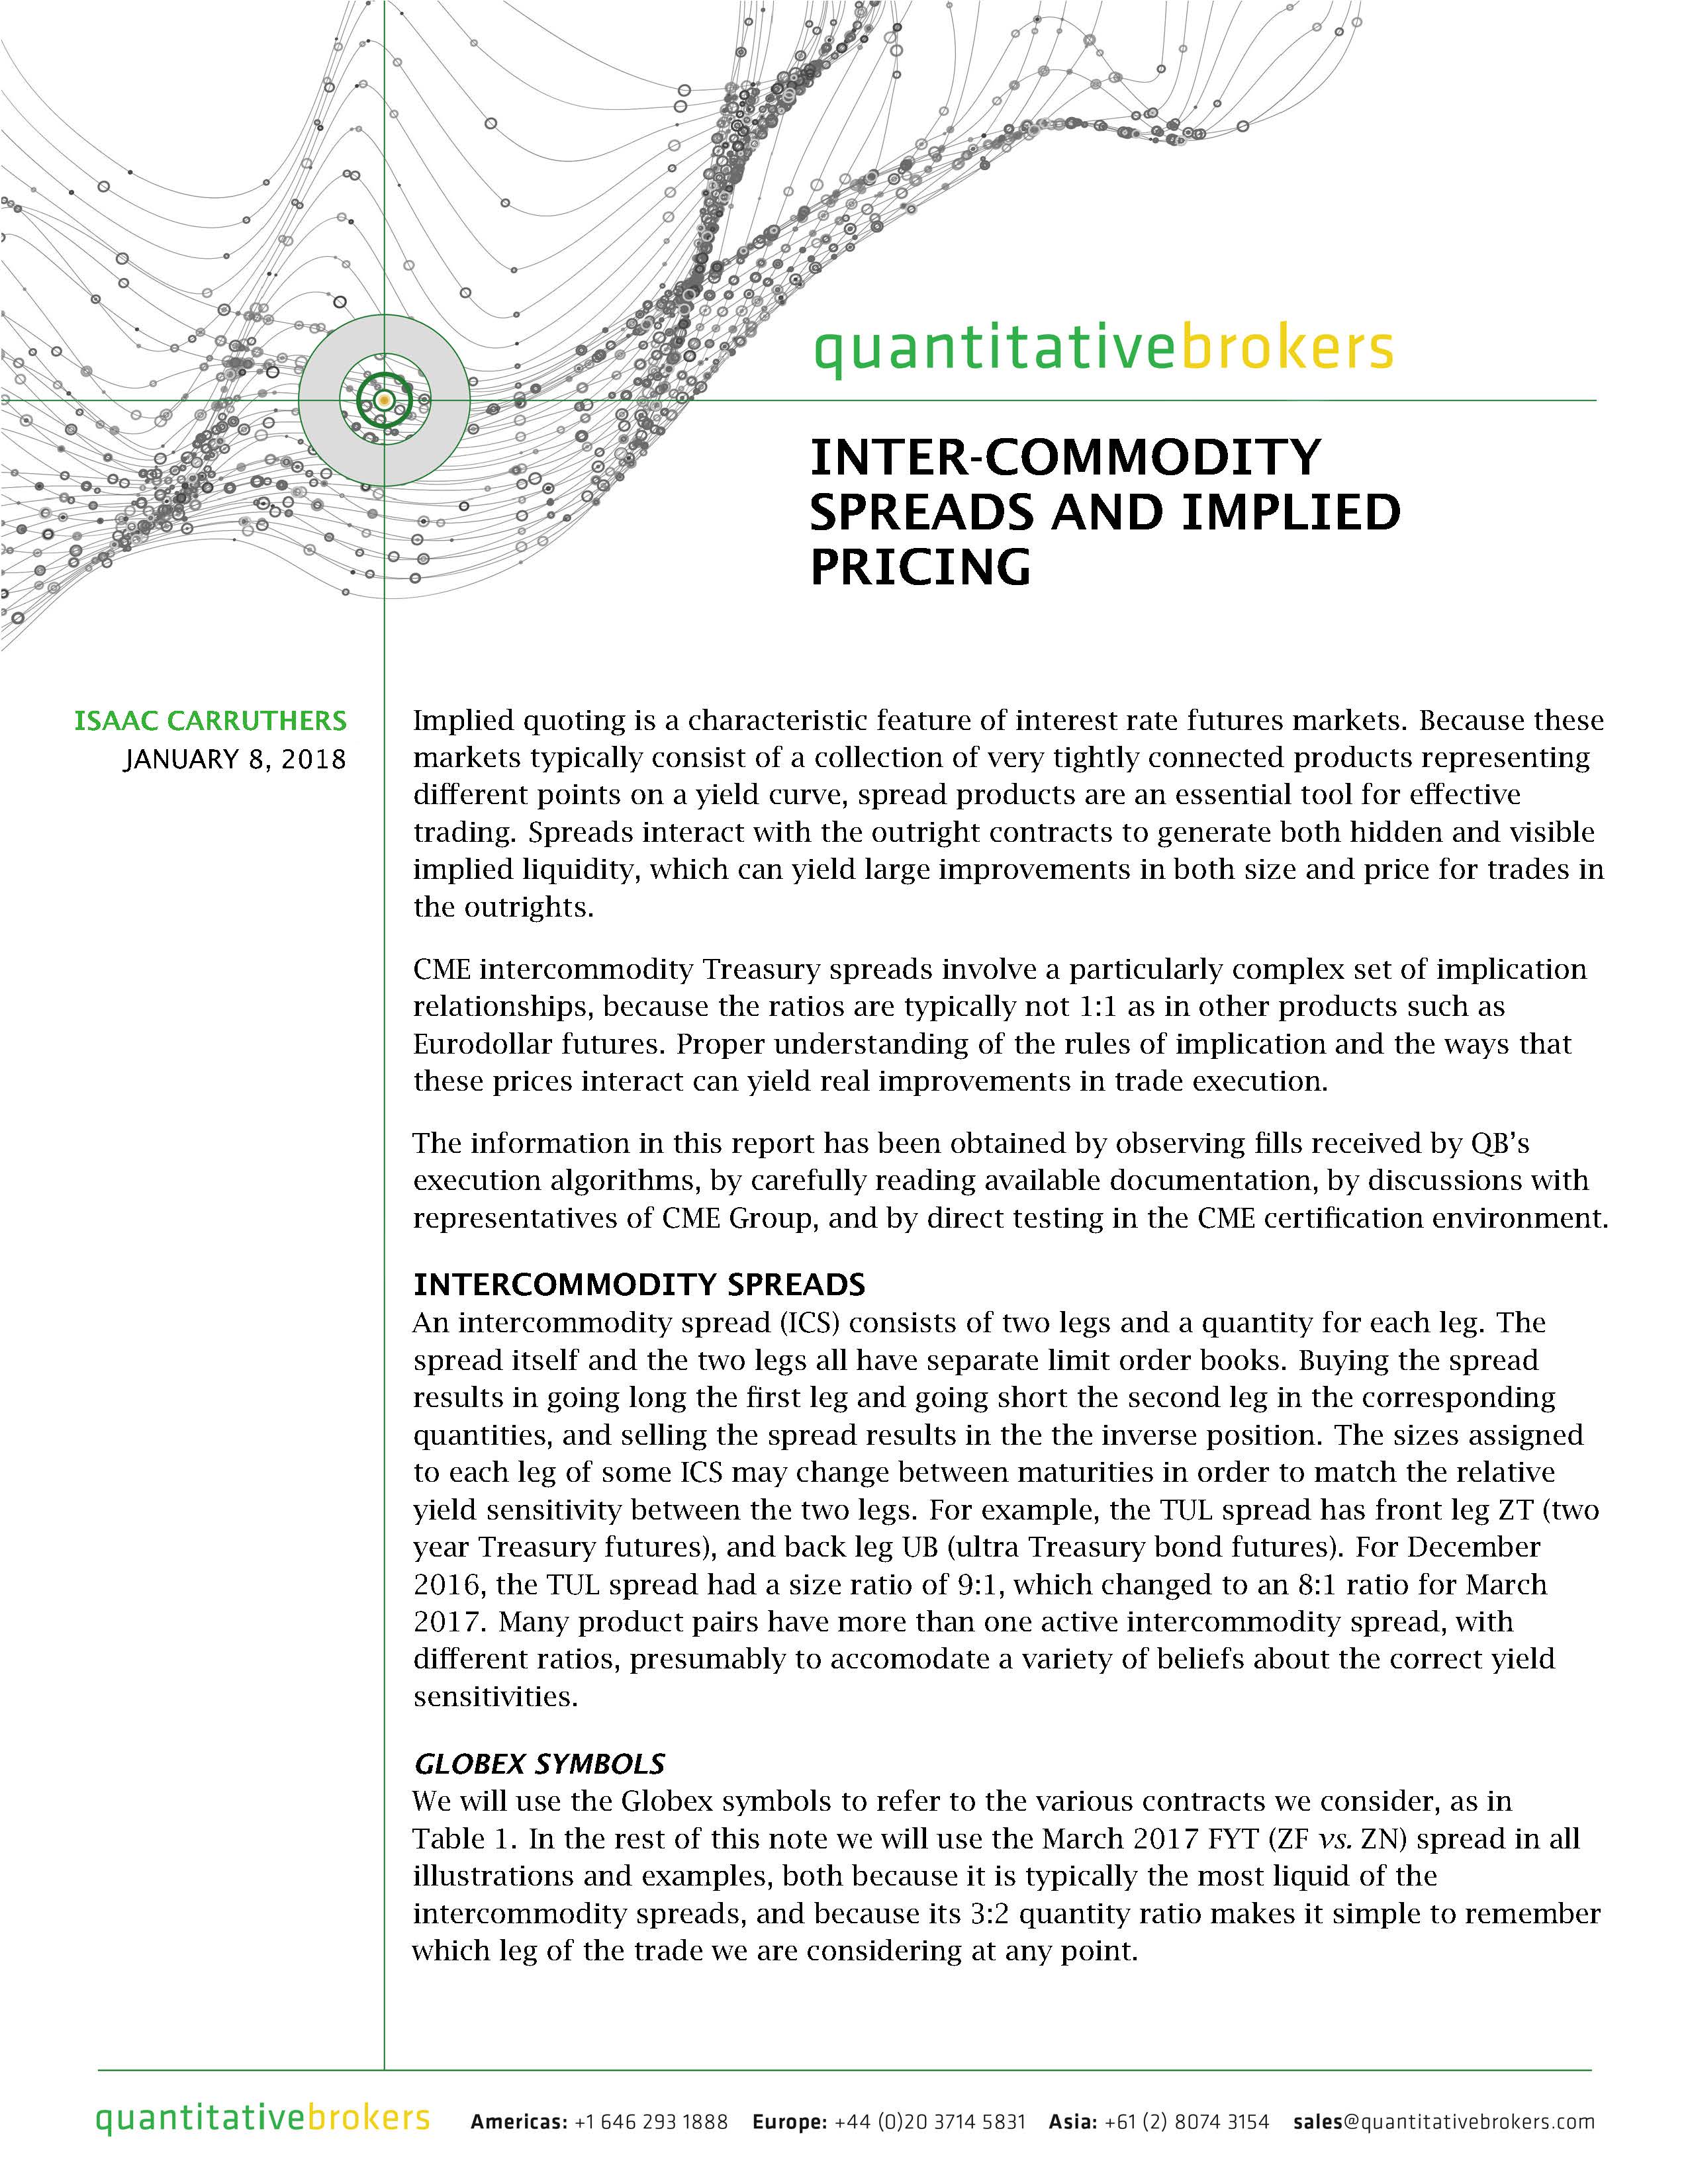 Sample Quantitative Analysis Report. Click here for full pdf.